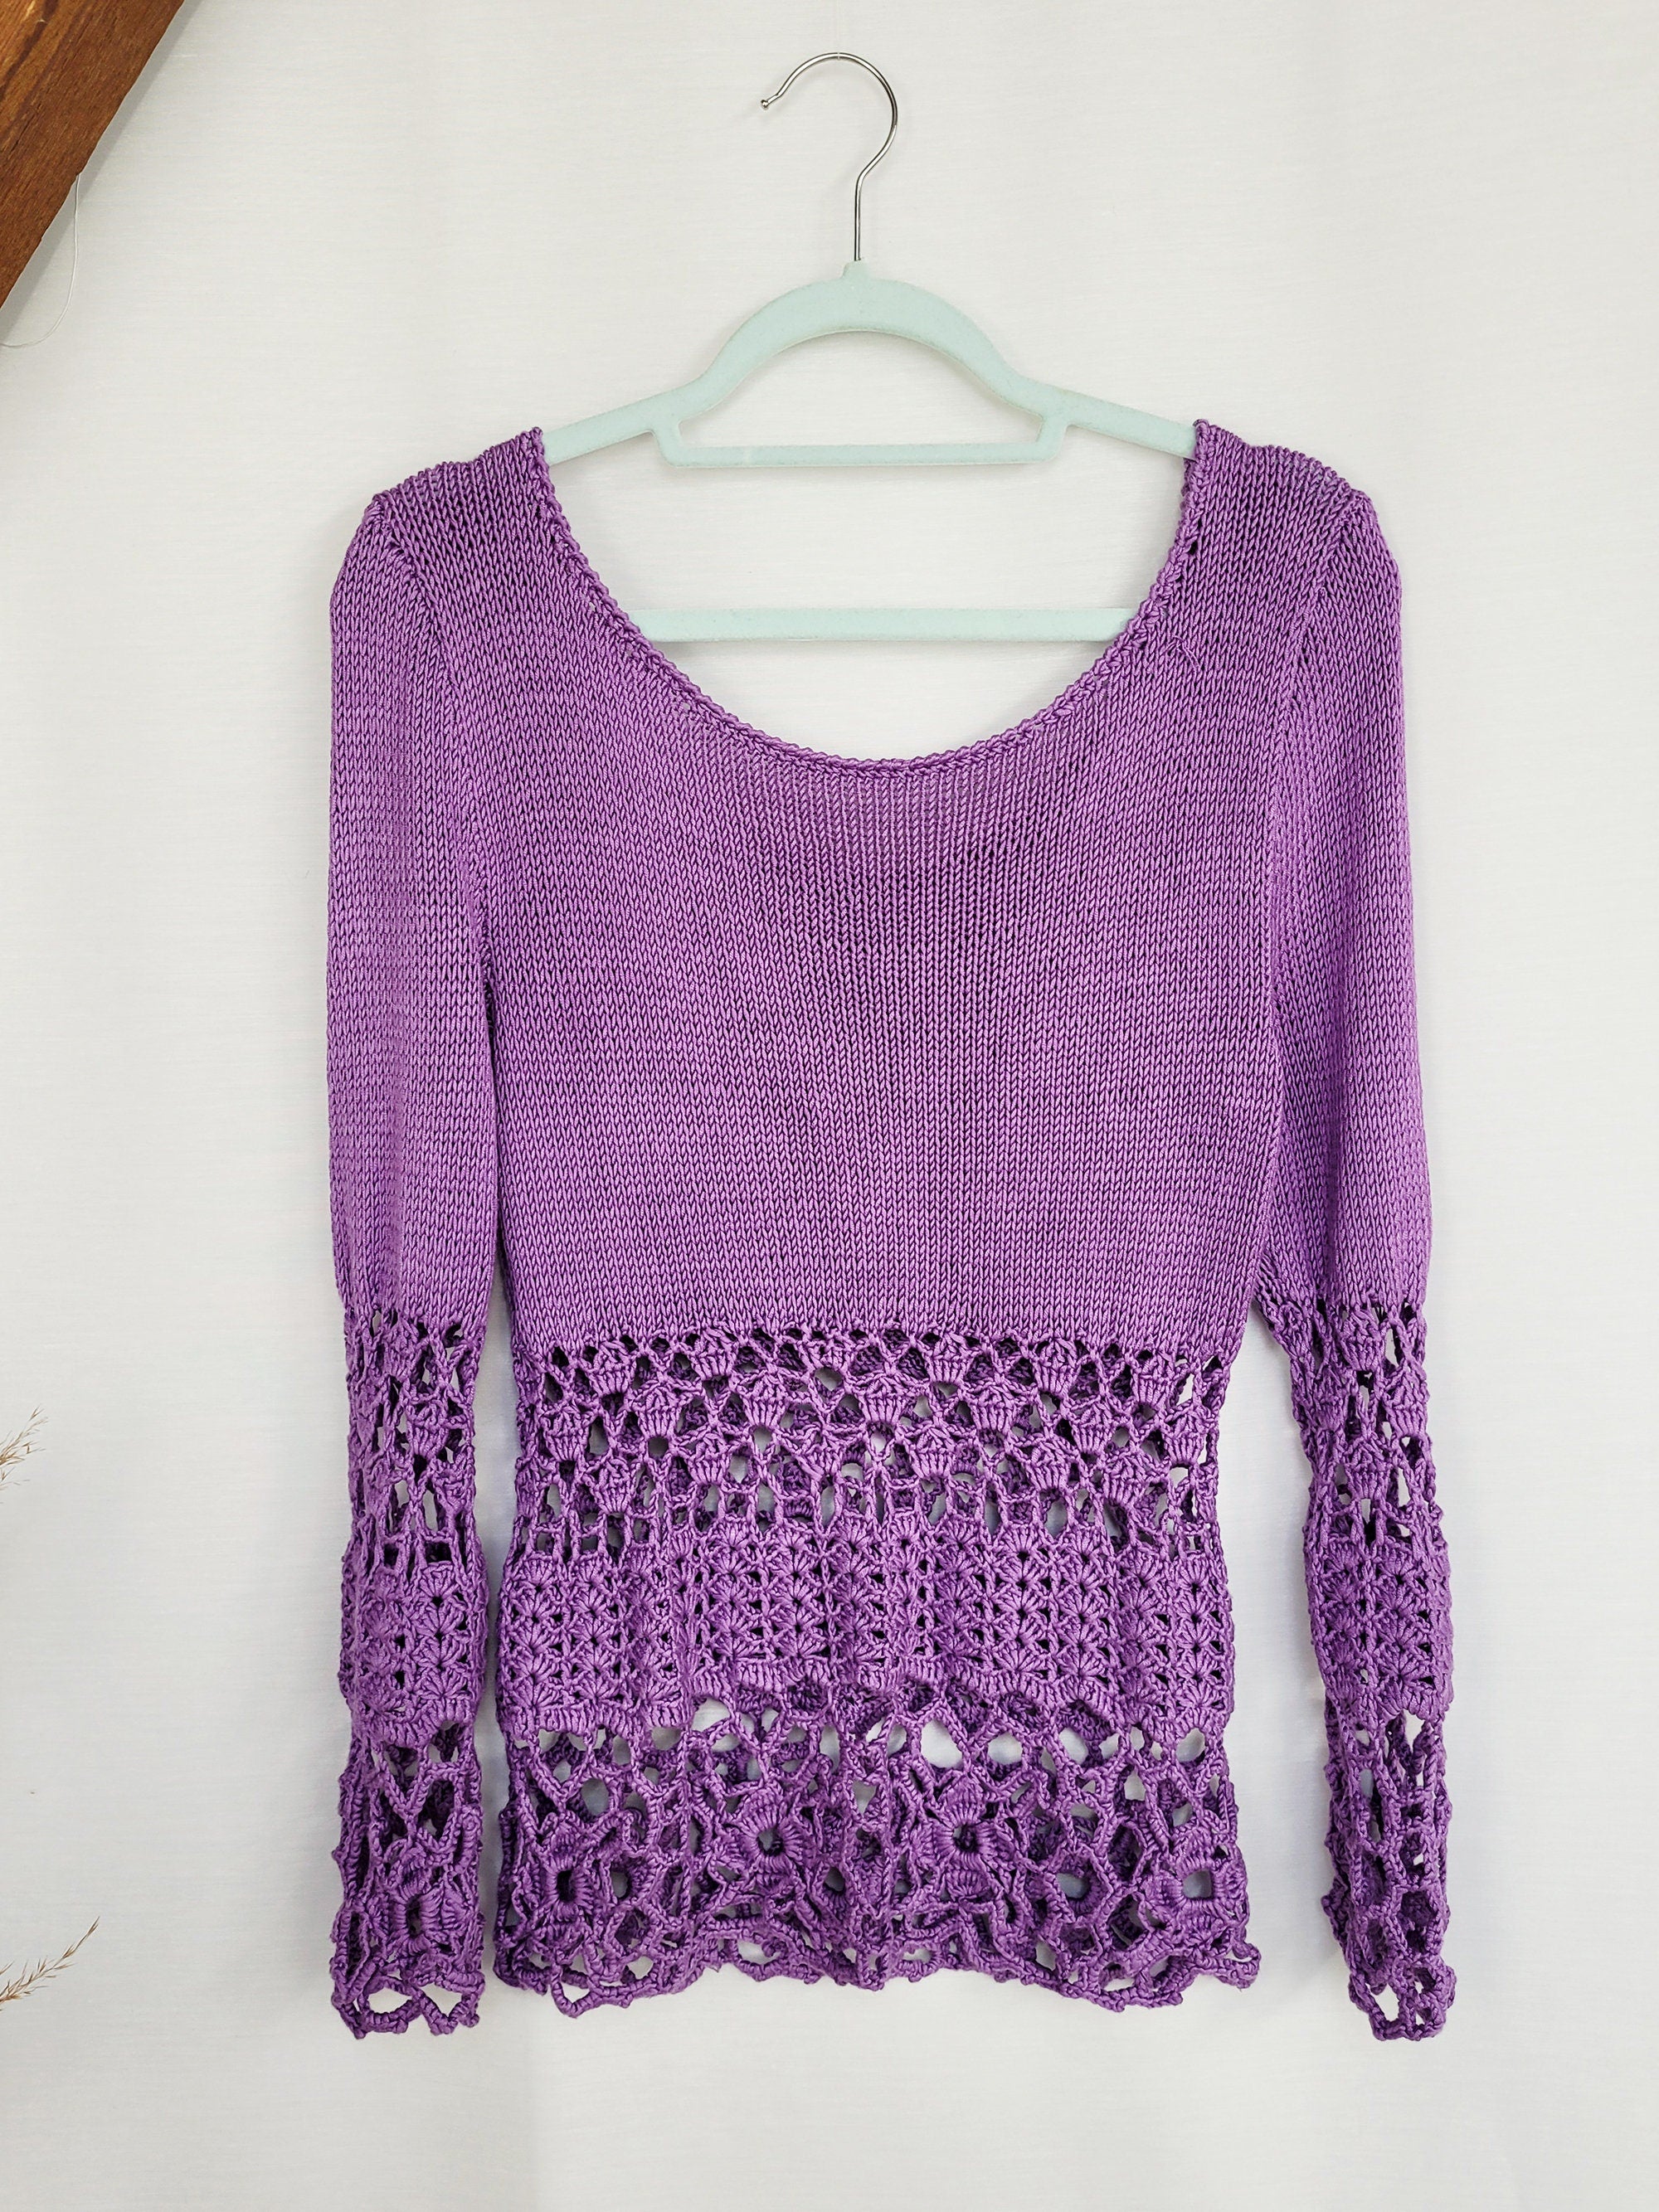 Vintage 90s minimalist purple knit sheer jumper top